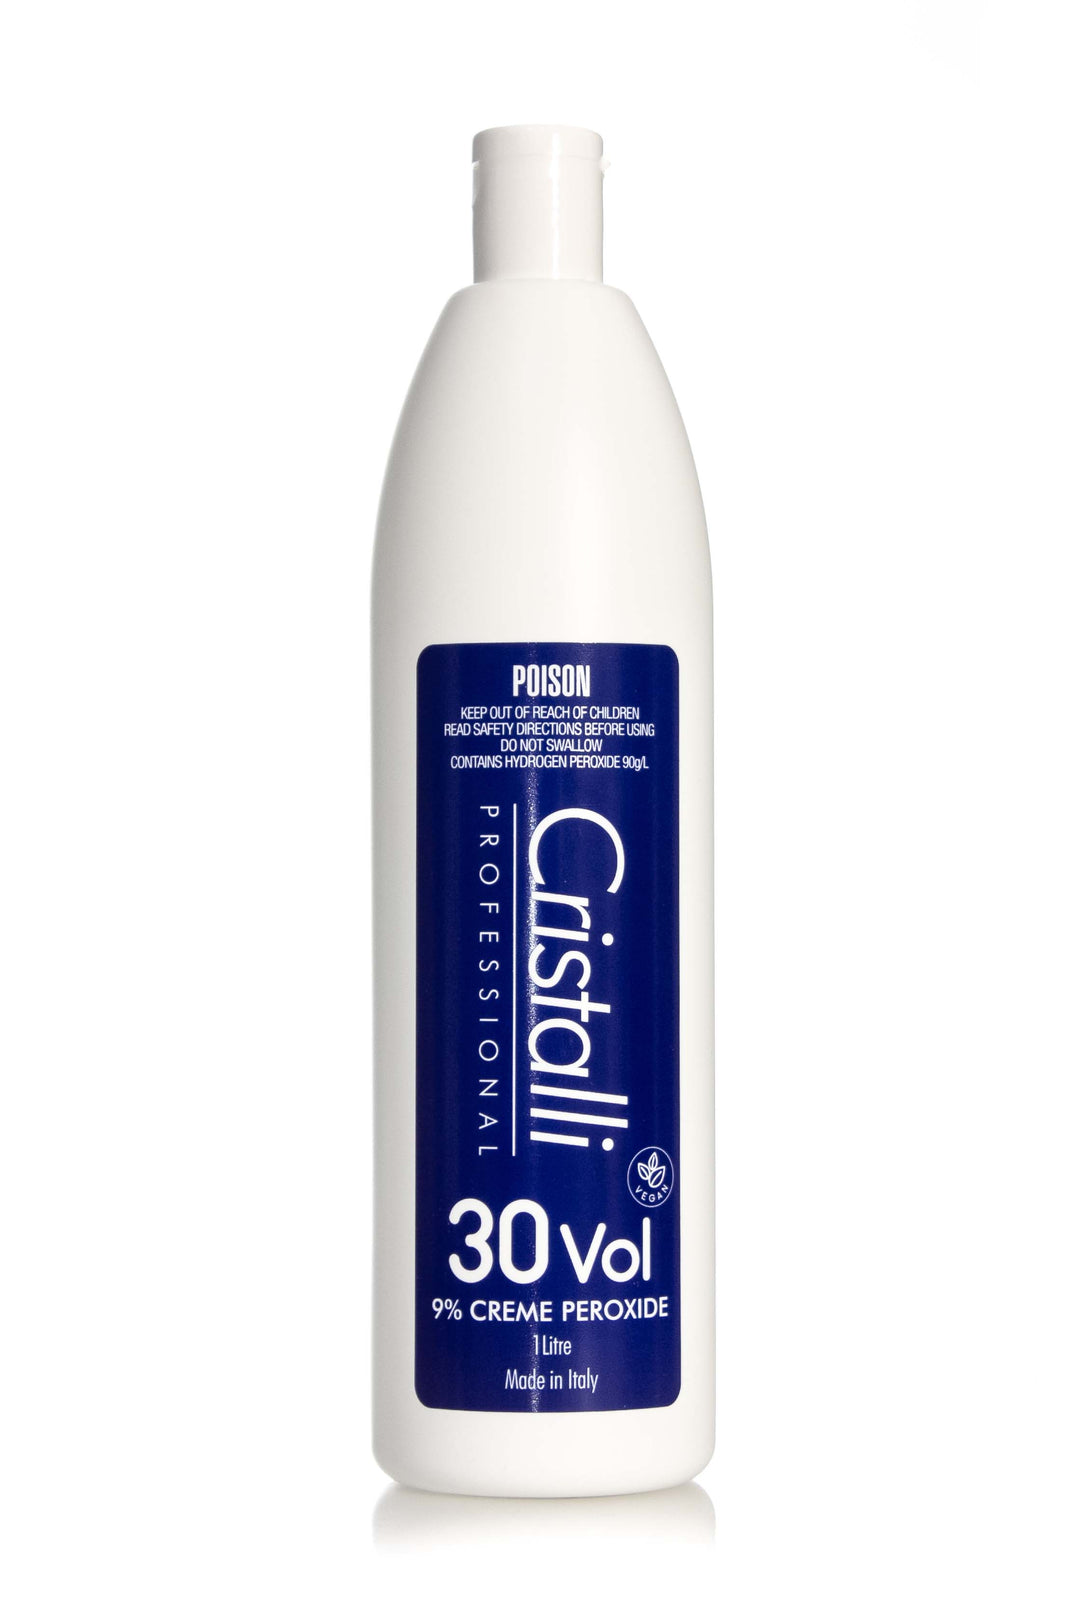 CRISTALLI Creme Peroxide  |  1000ml, Various Colours